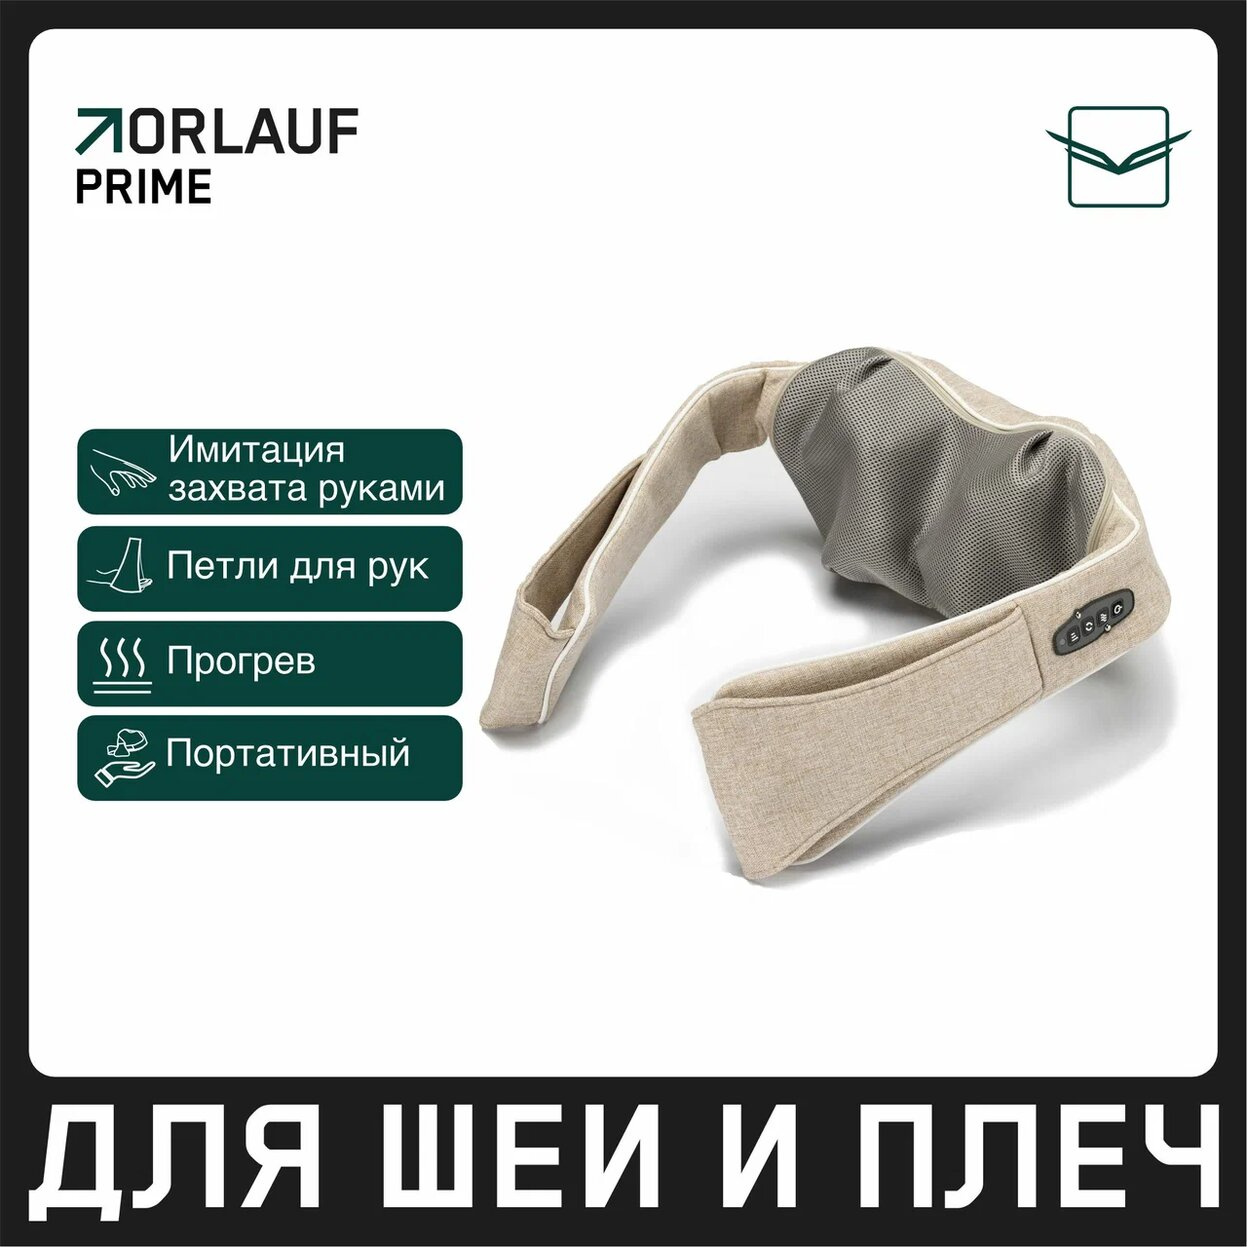 Orlauf Prime из каталога устройств для массажа в Самаре по цене 11900 ₽